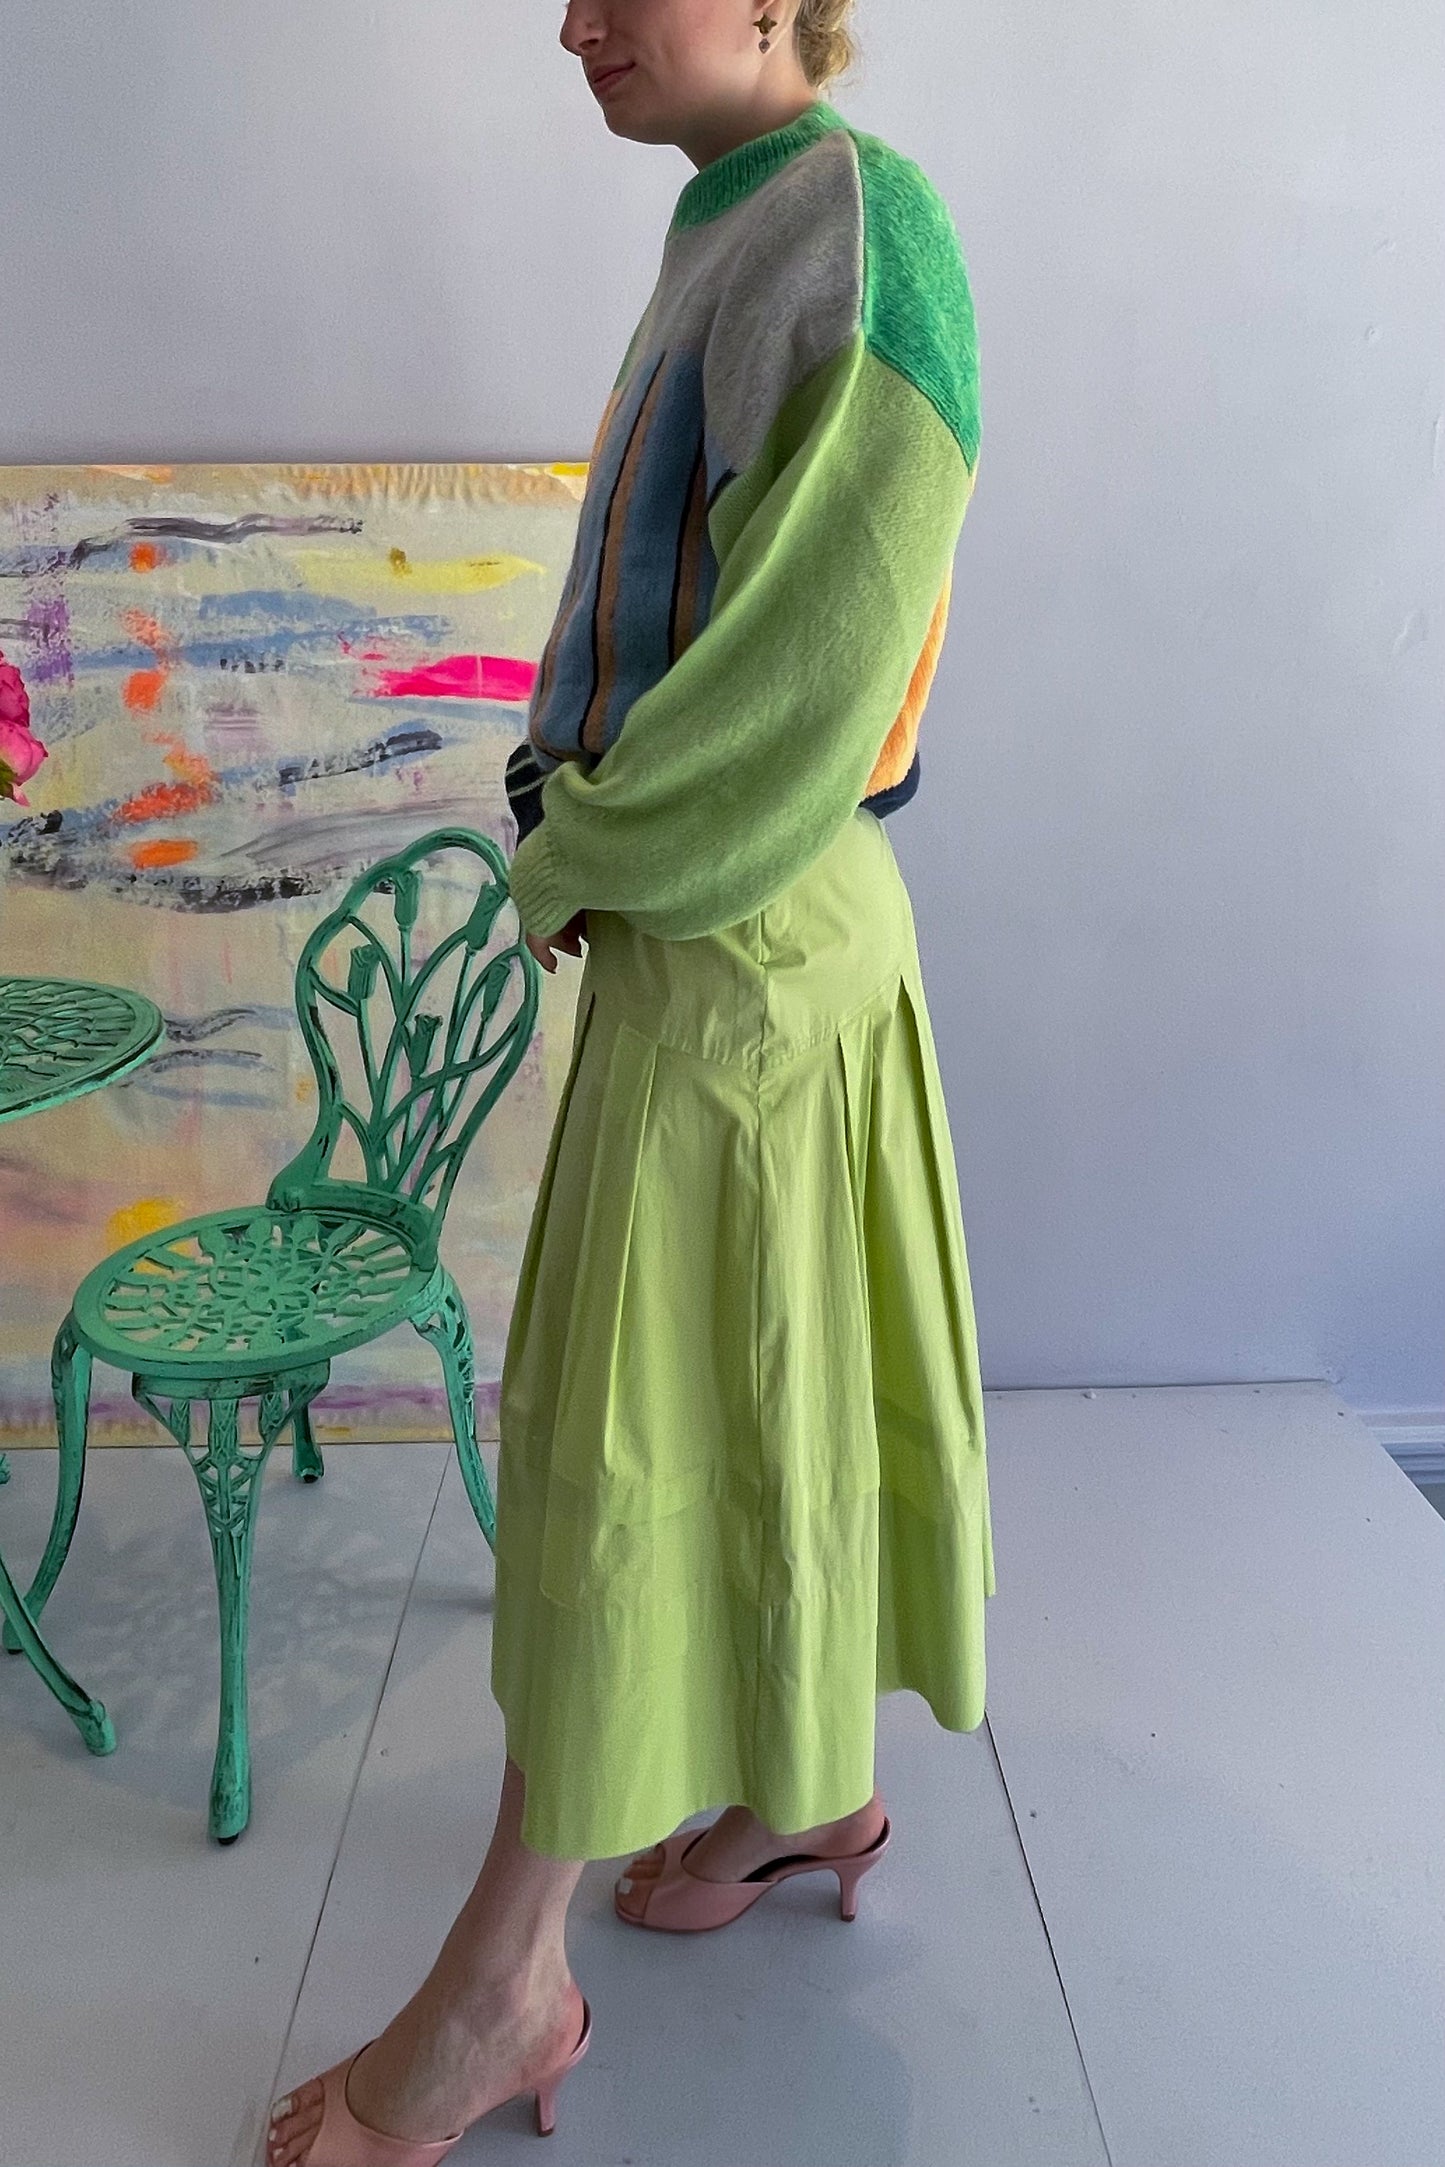 Vivetta: Mini-Panel Skirt: Lizard Green